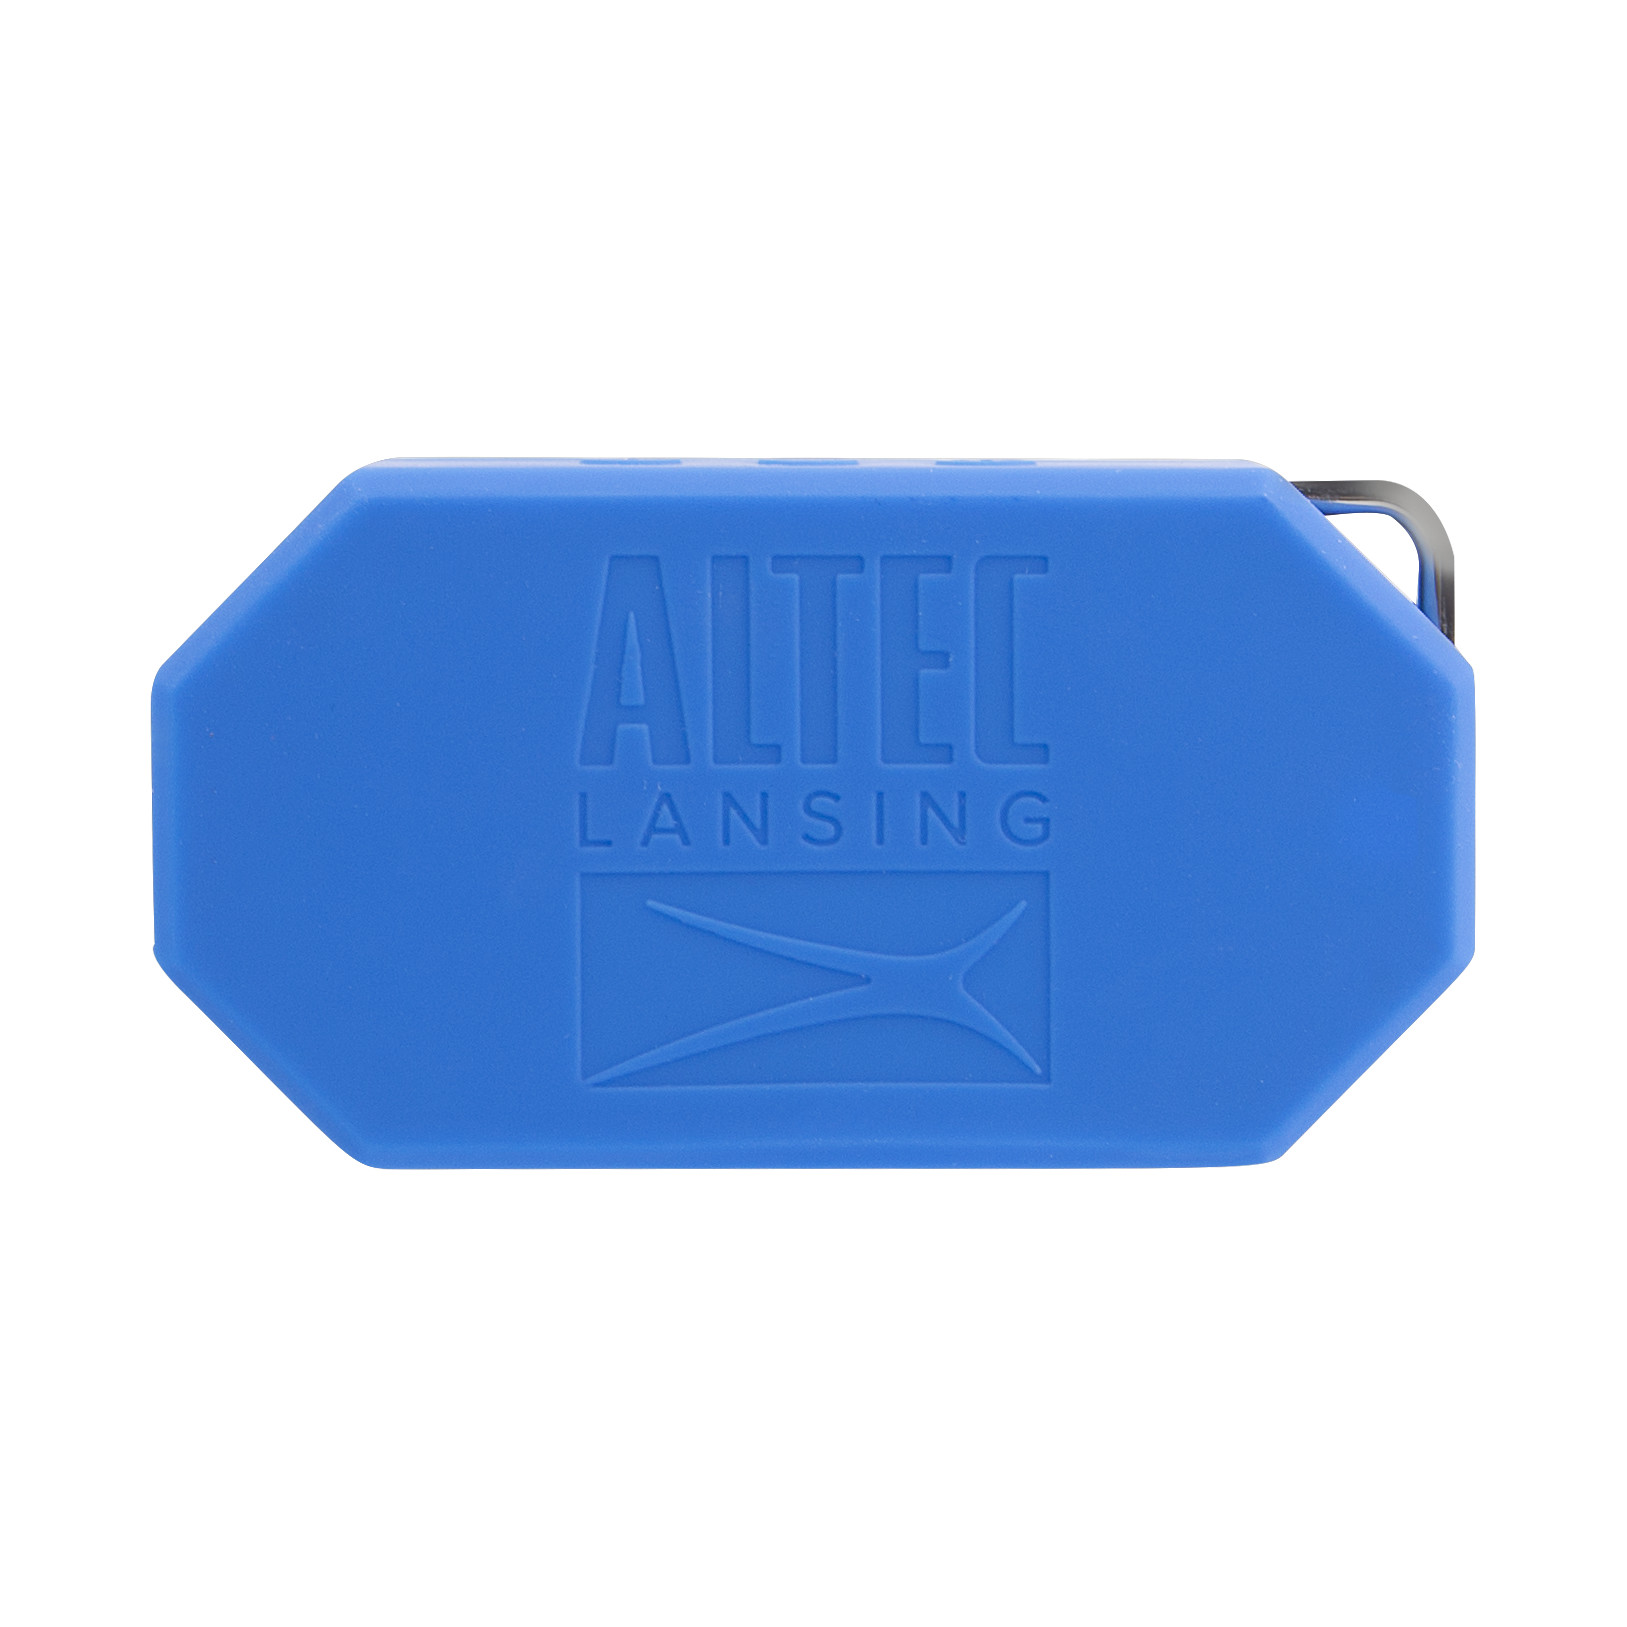 Altec Lansing Mini H2O 3 Portable Waterproof Bluetooth Speaker Blue - image 2 of 11